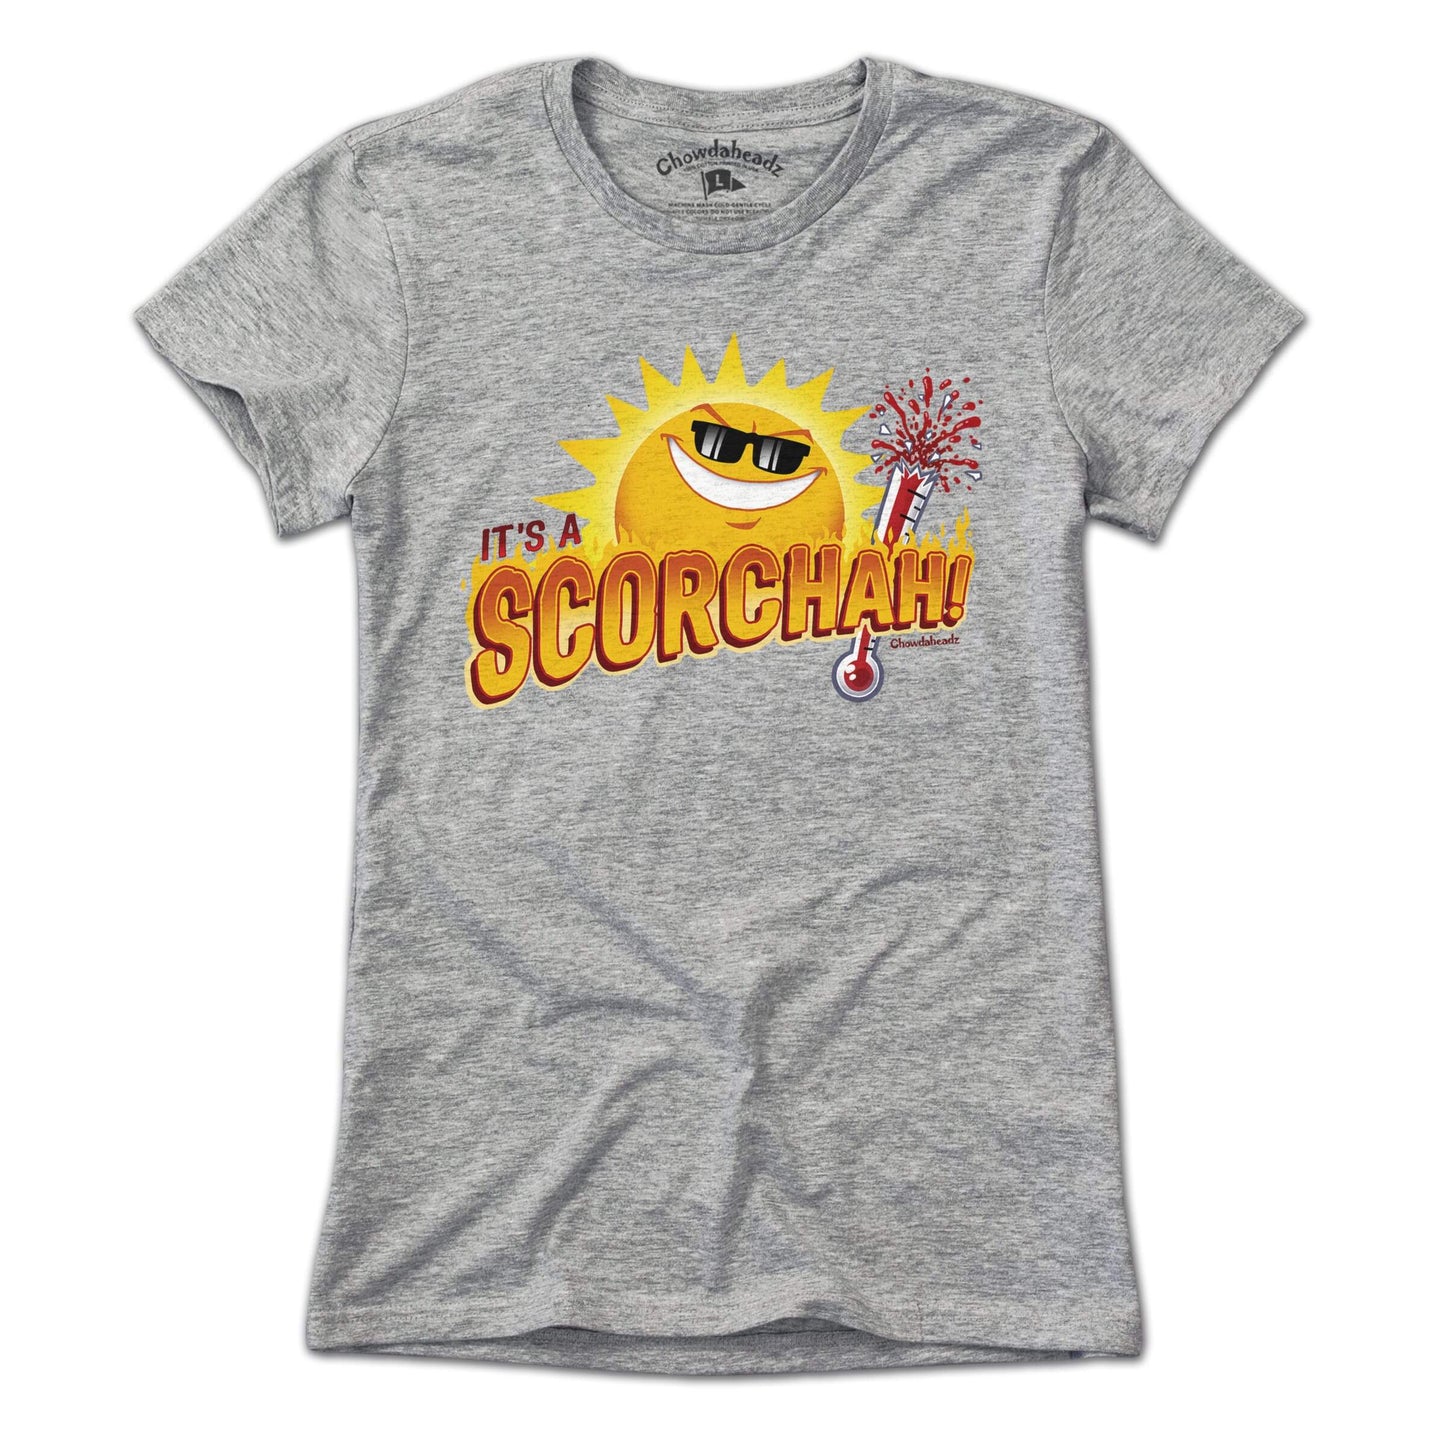 It's a Scorchah! T-Shirt - Chowdaheadz